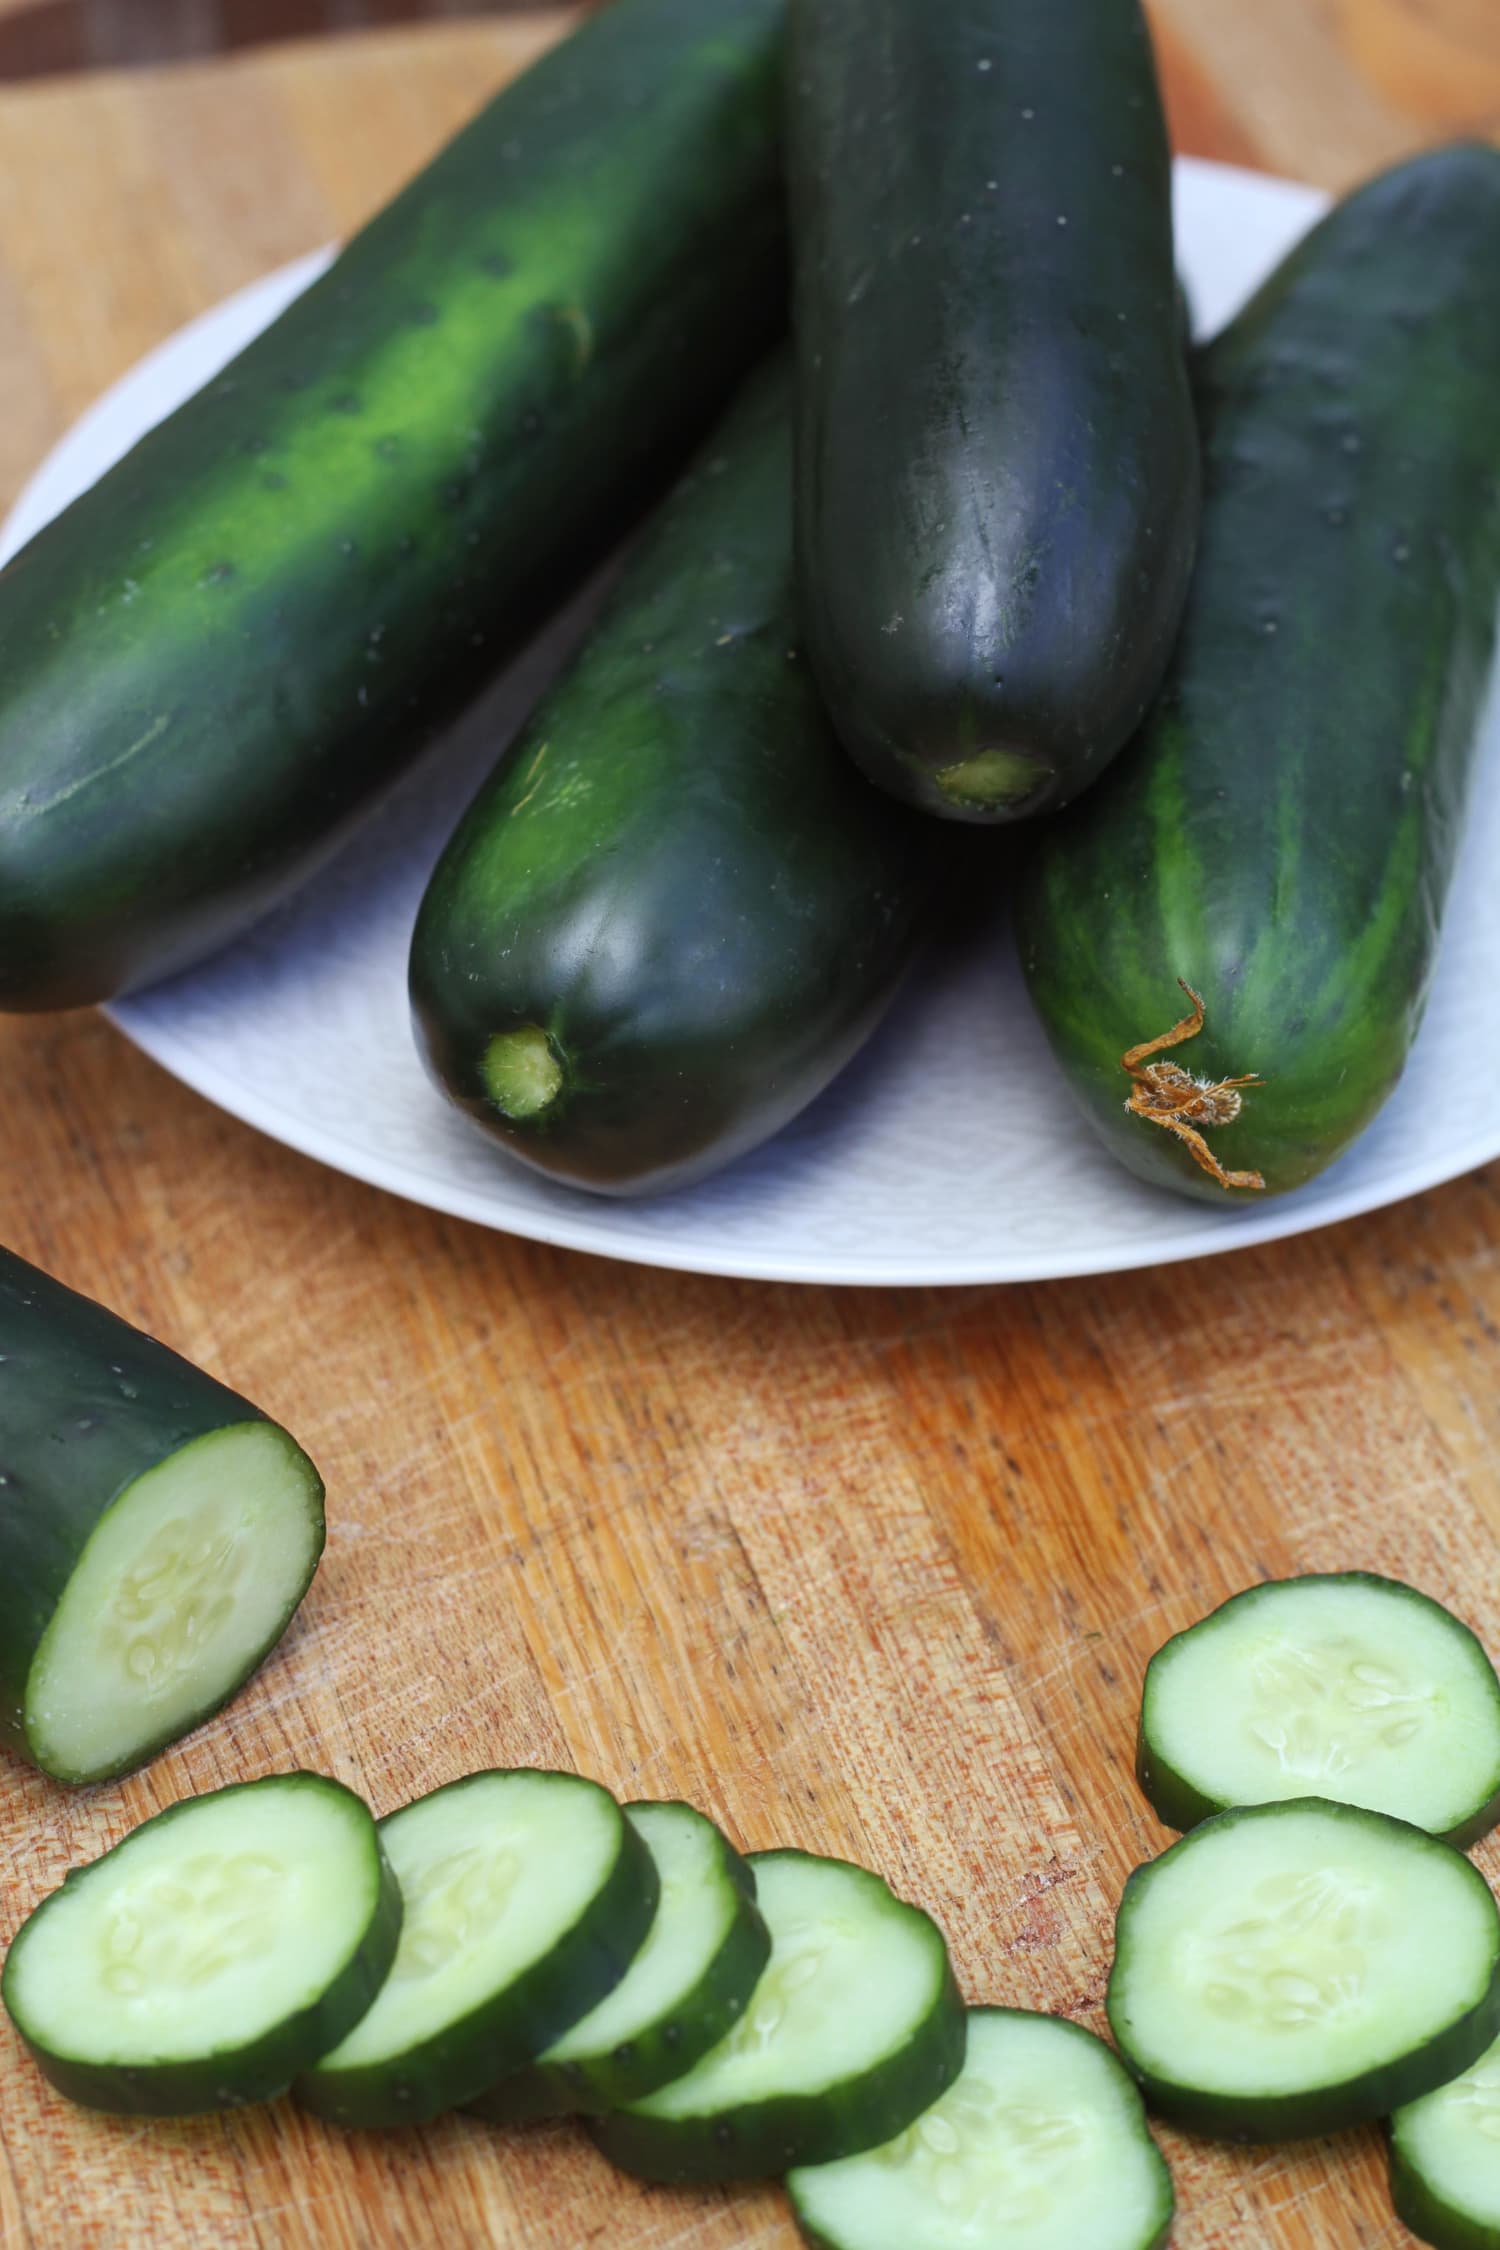 How To Grow Cucumbers